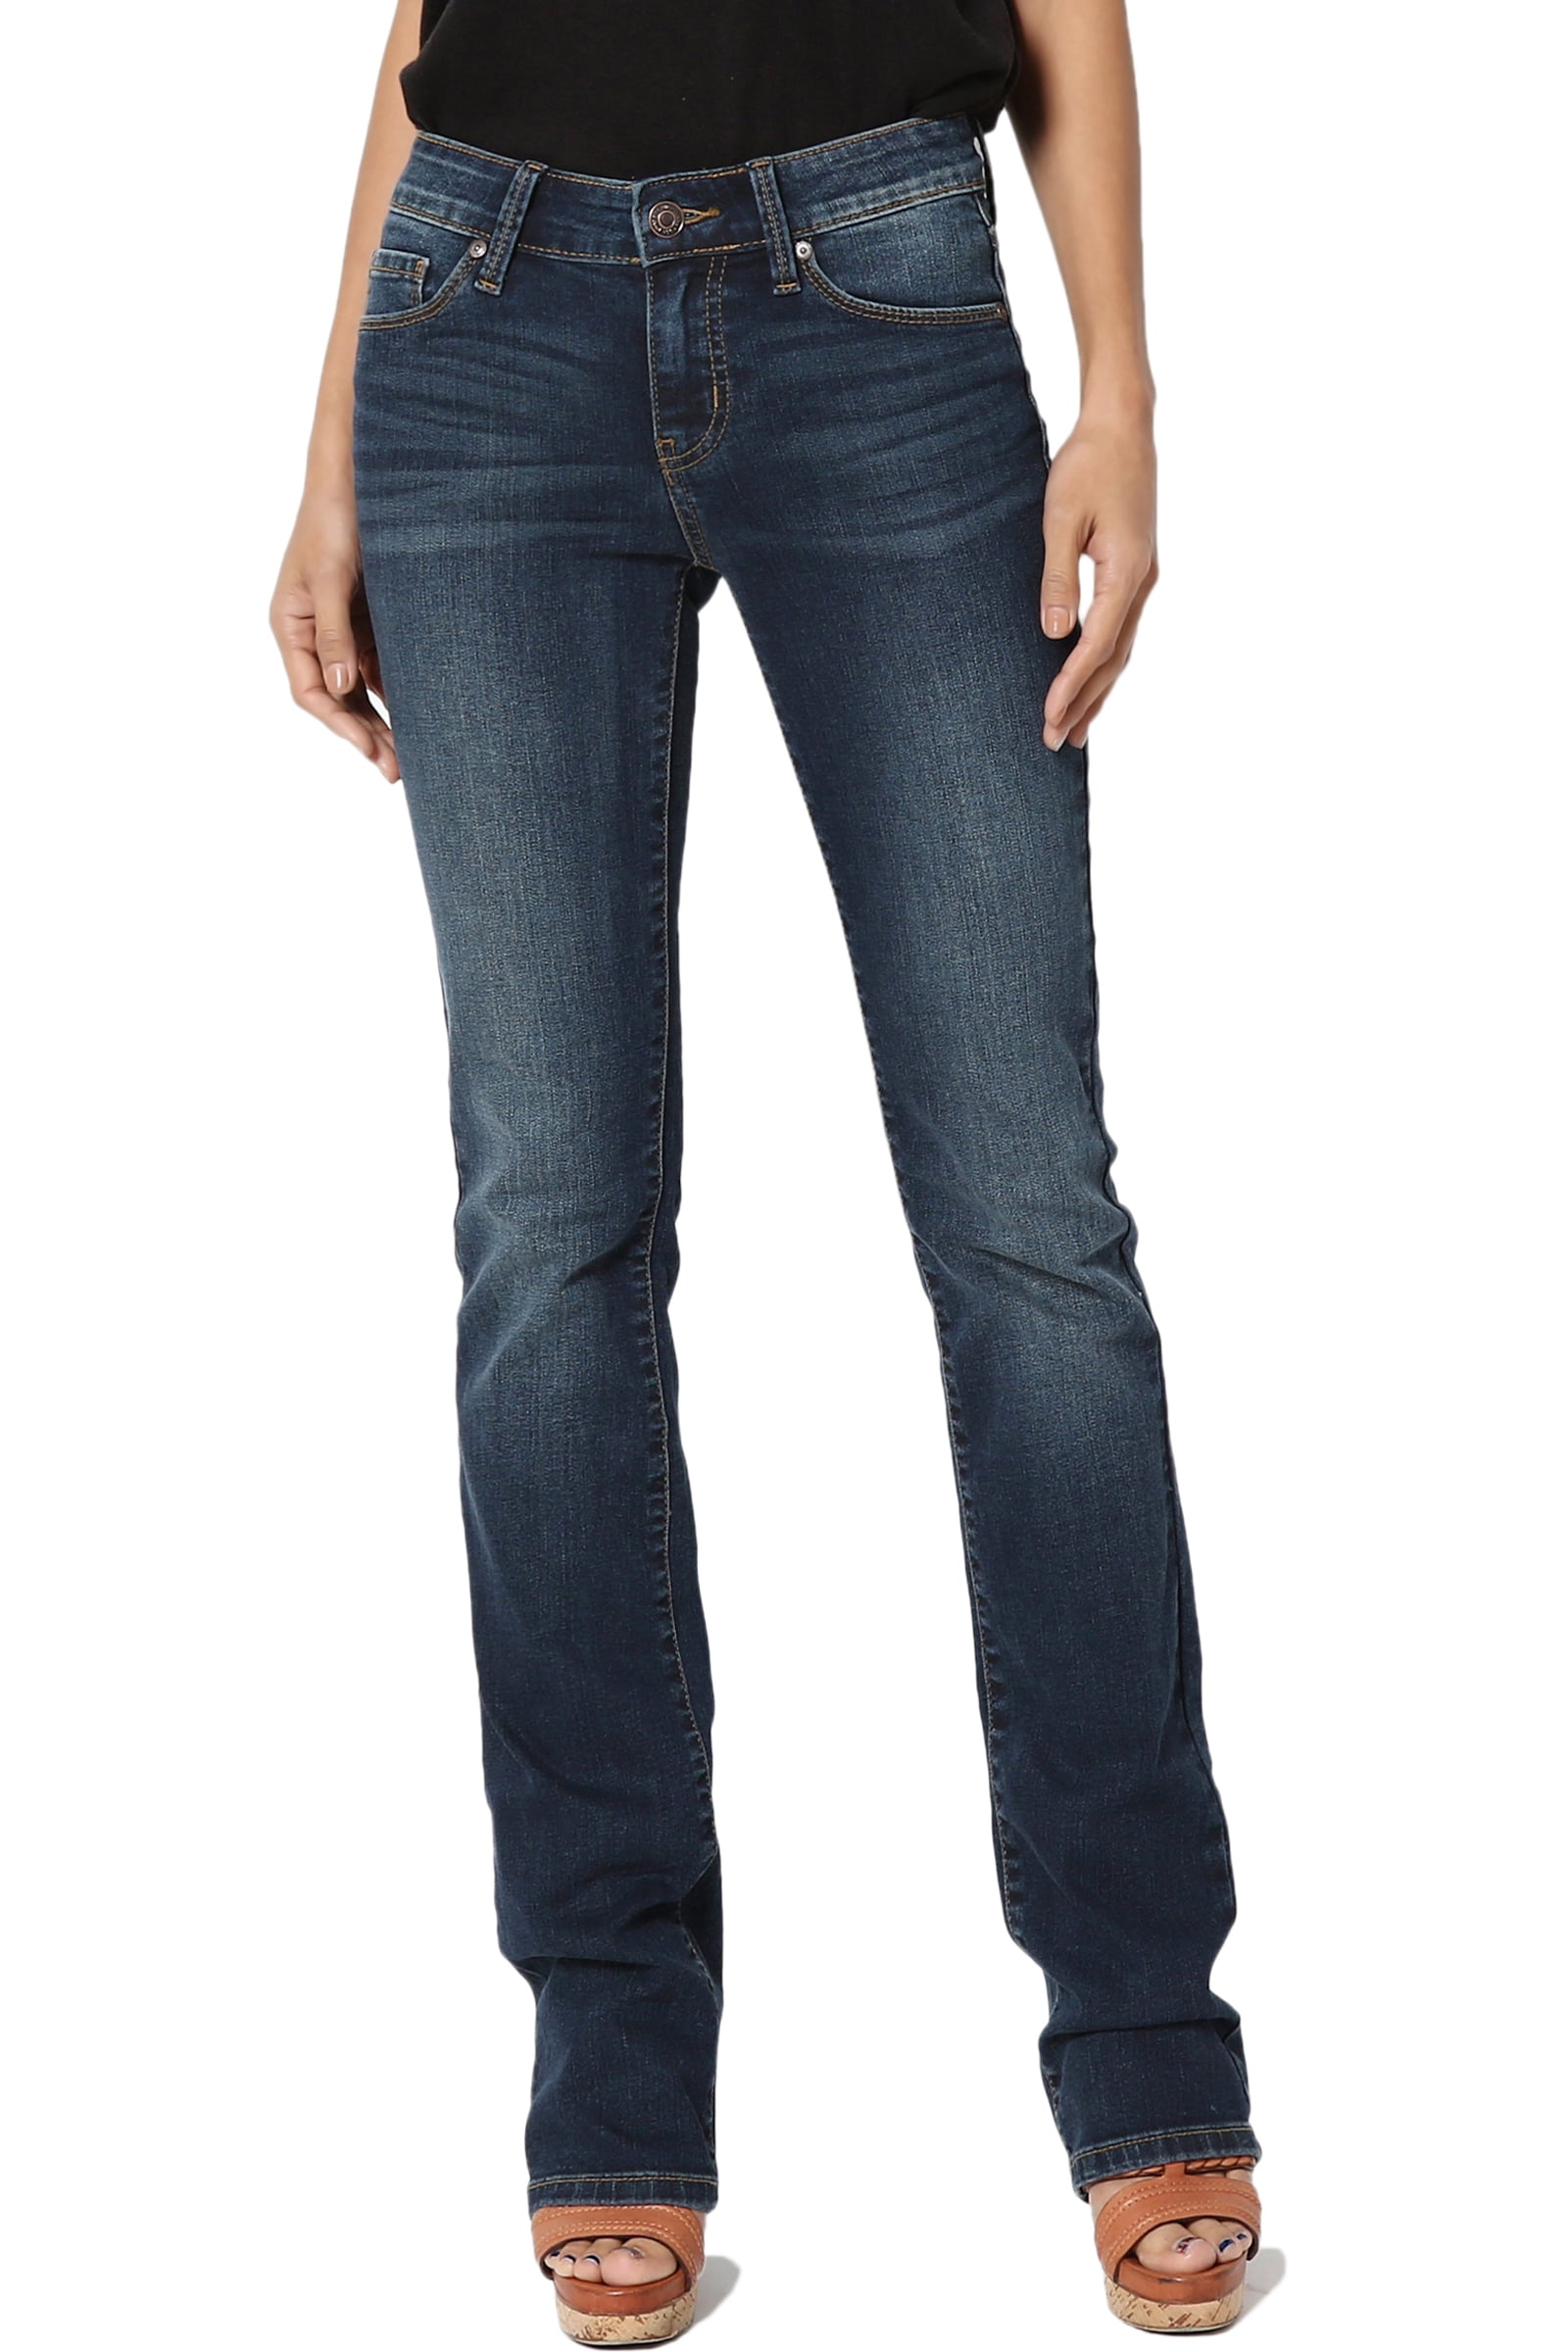 TheMogan Women's Mid Rise Slim Fit Bootcut Jeans in Soft Dark Blue ...